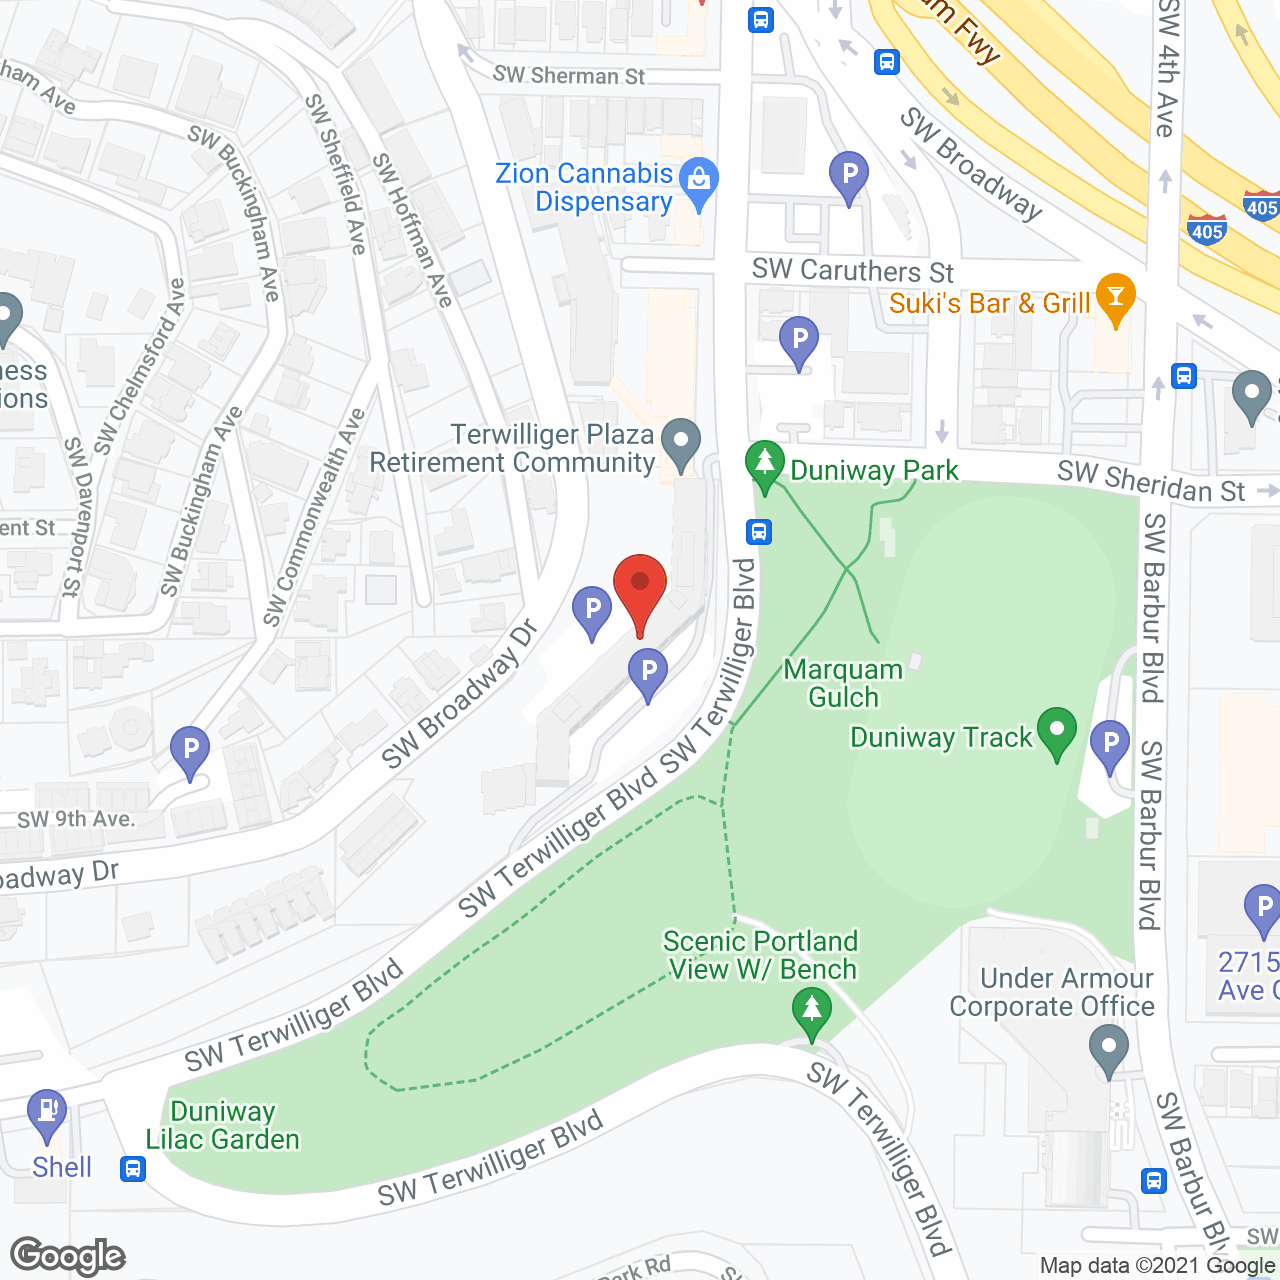 Terwilliger Plaza in google map